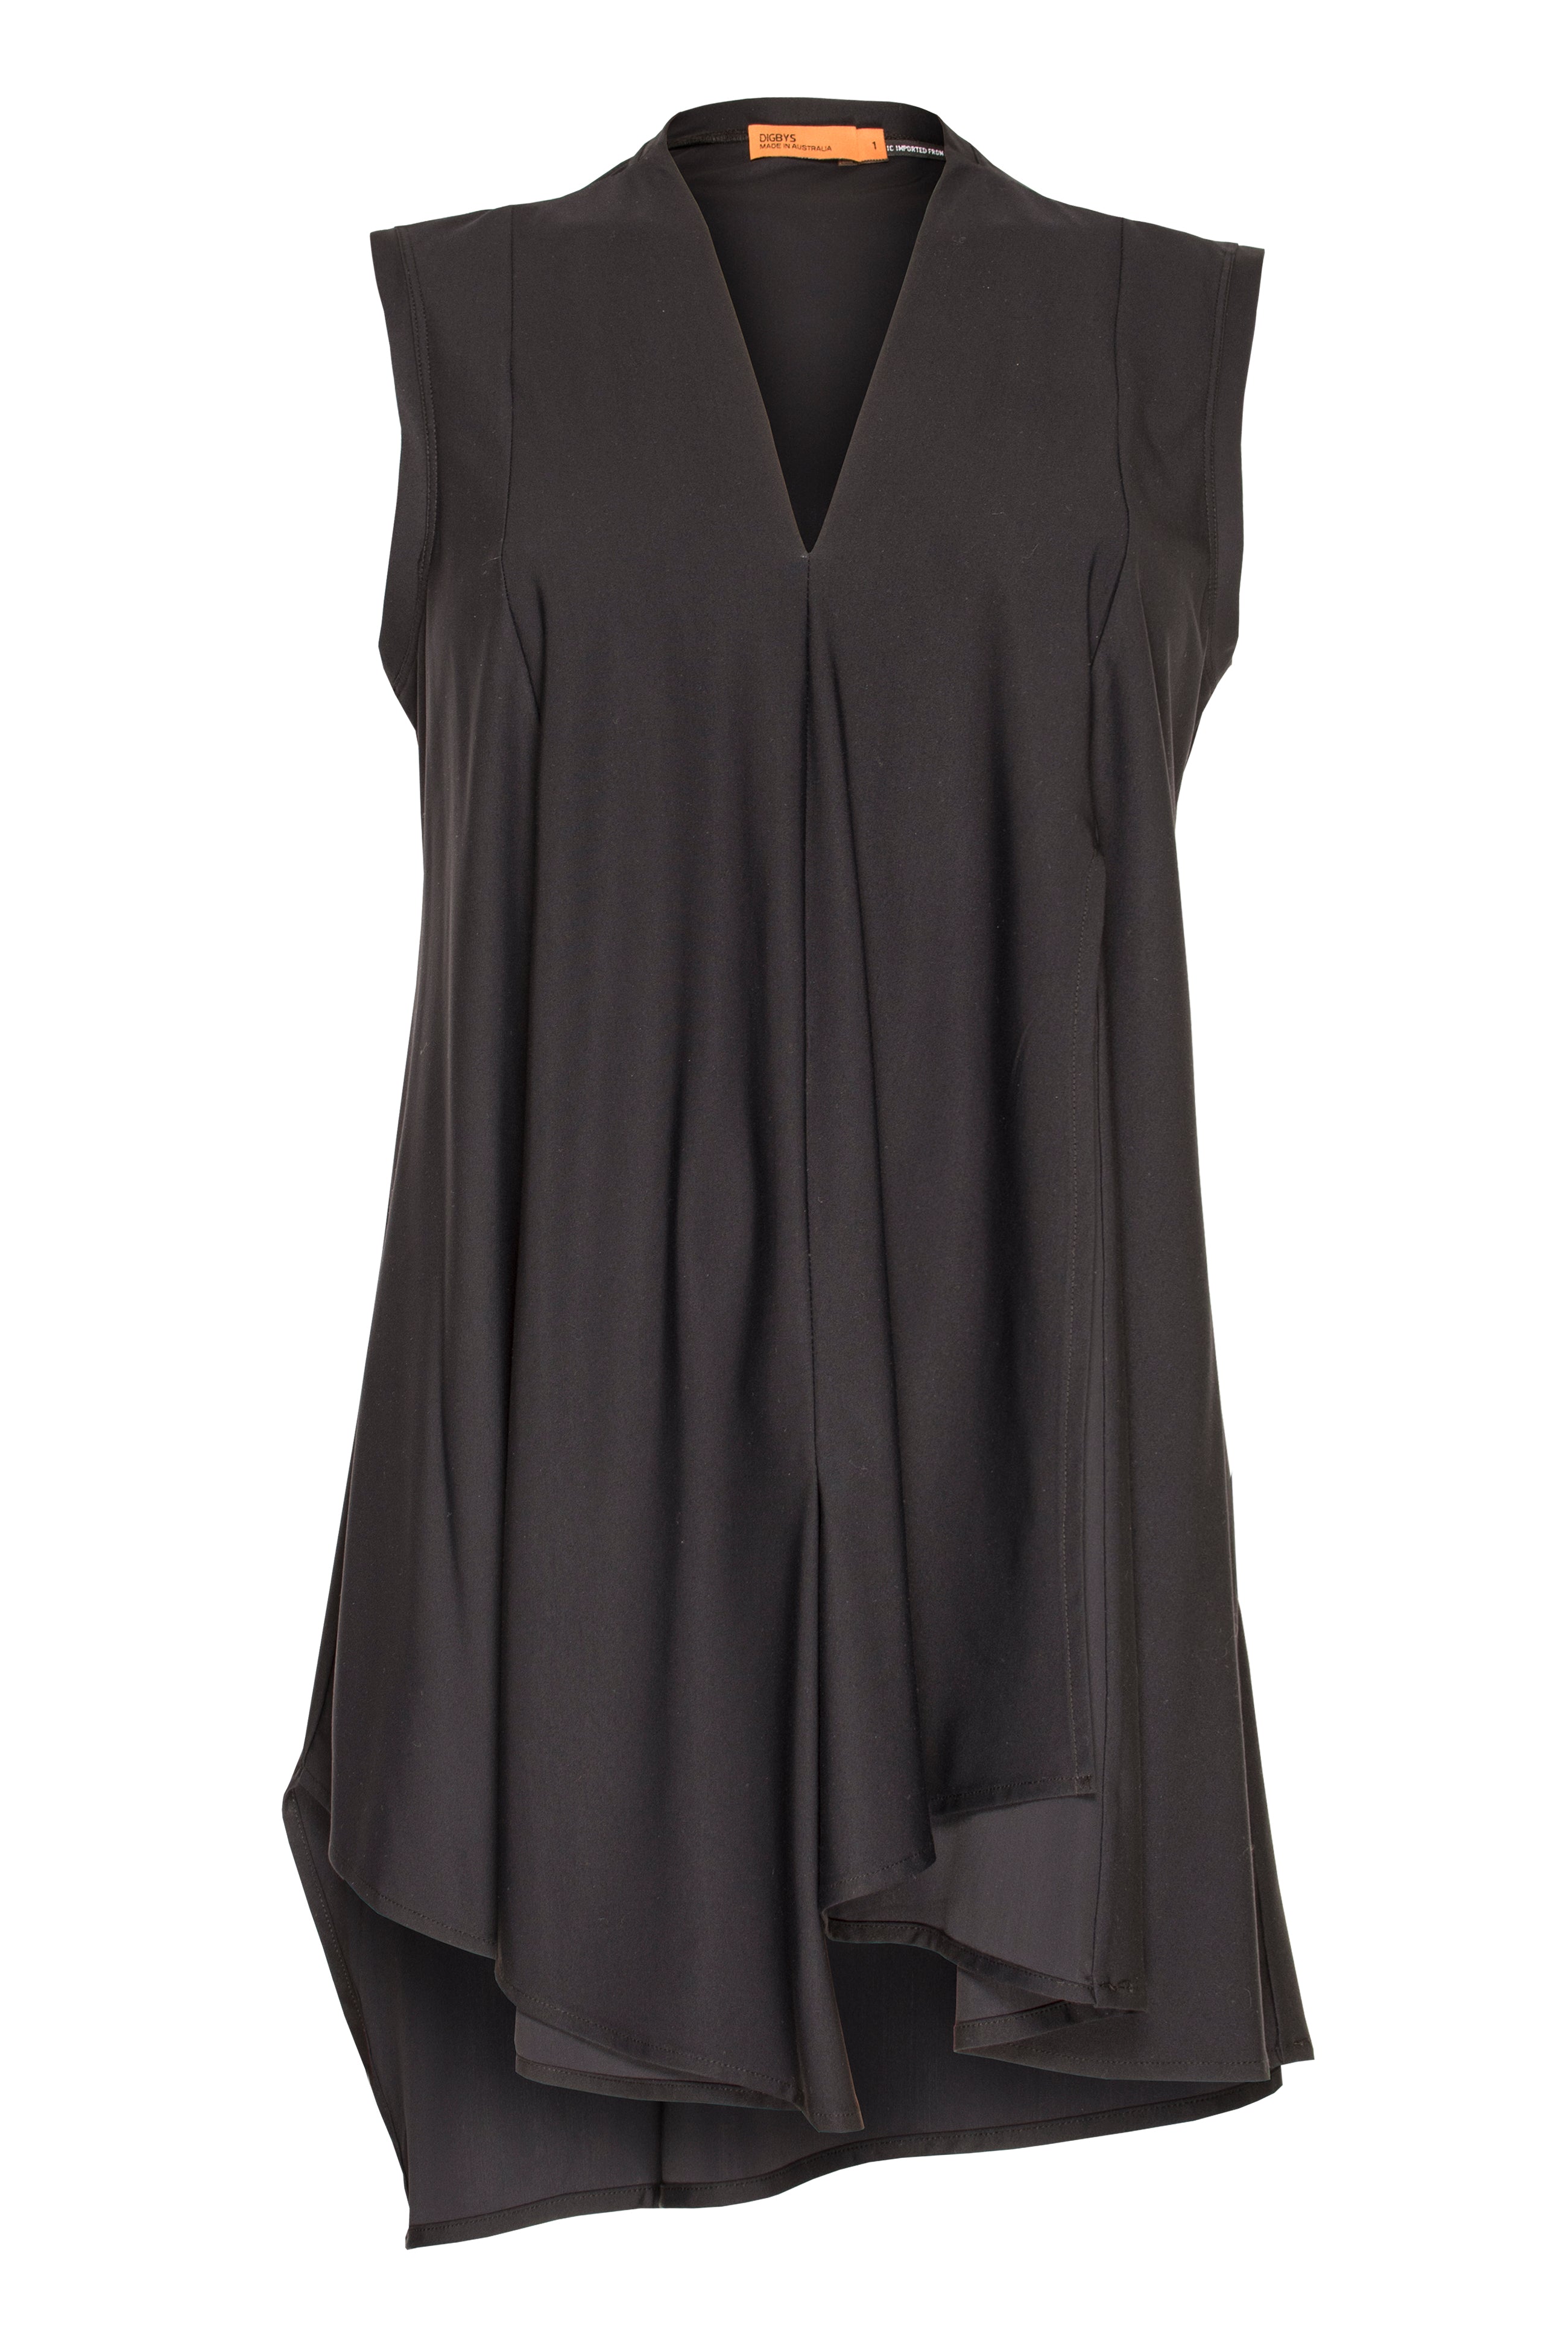 Black Jersey Folded Front Singlet 6203 – DIGBYS Boutique